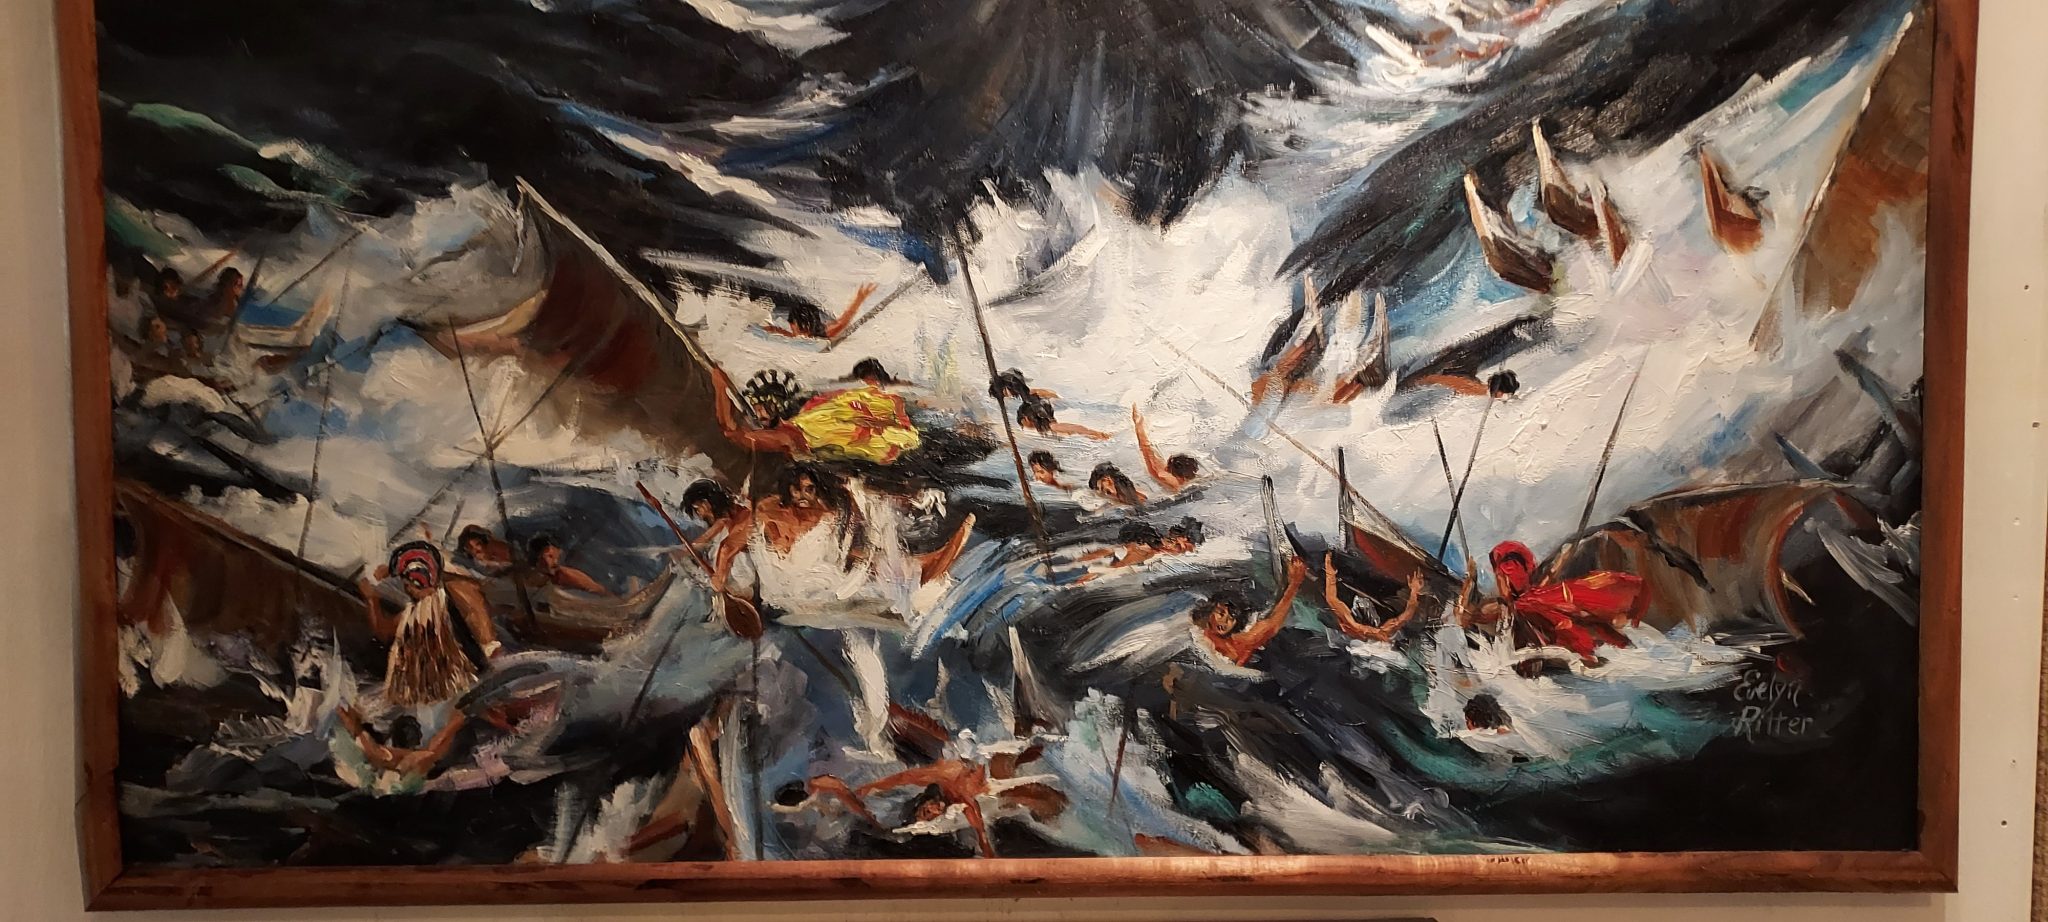 Kamemeha warriors meet storm-Painting in Kauai Museum-Linda Ballou